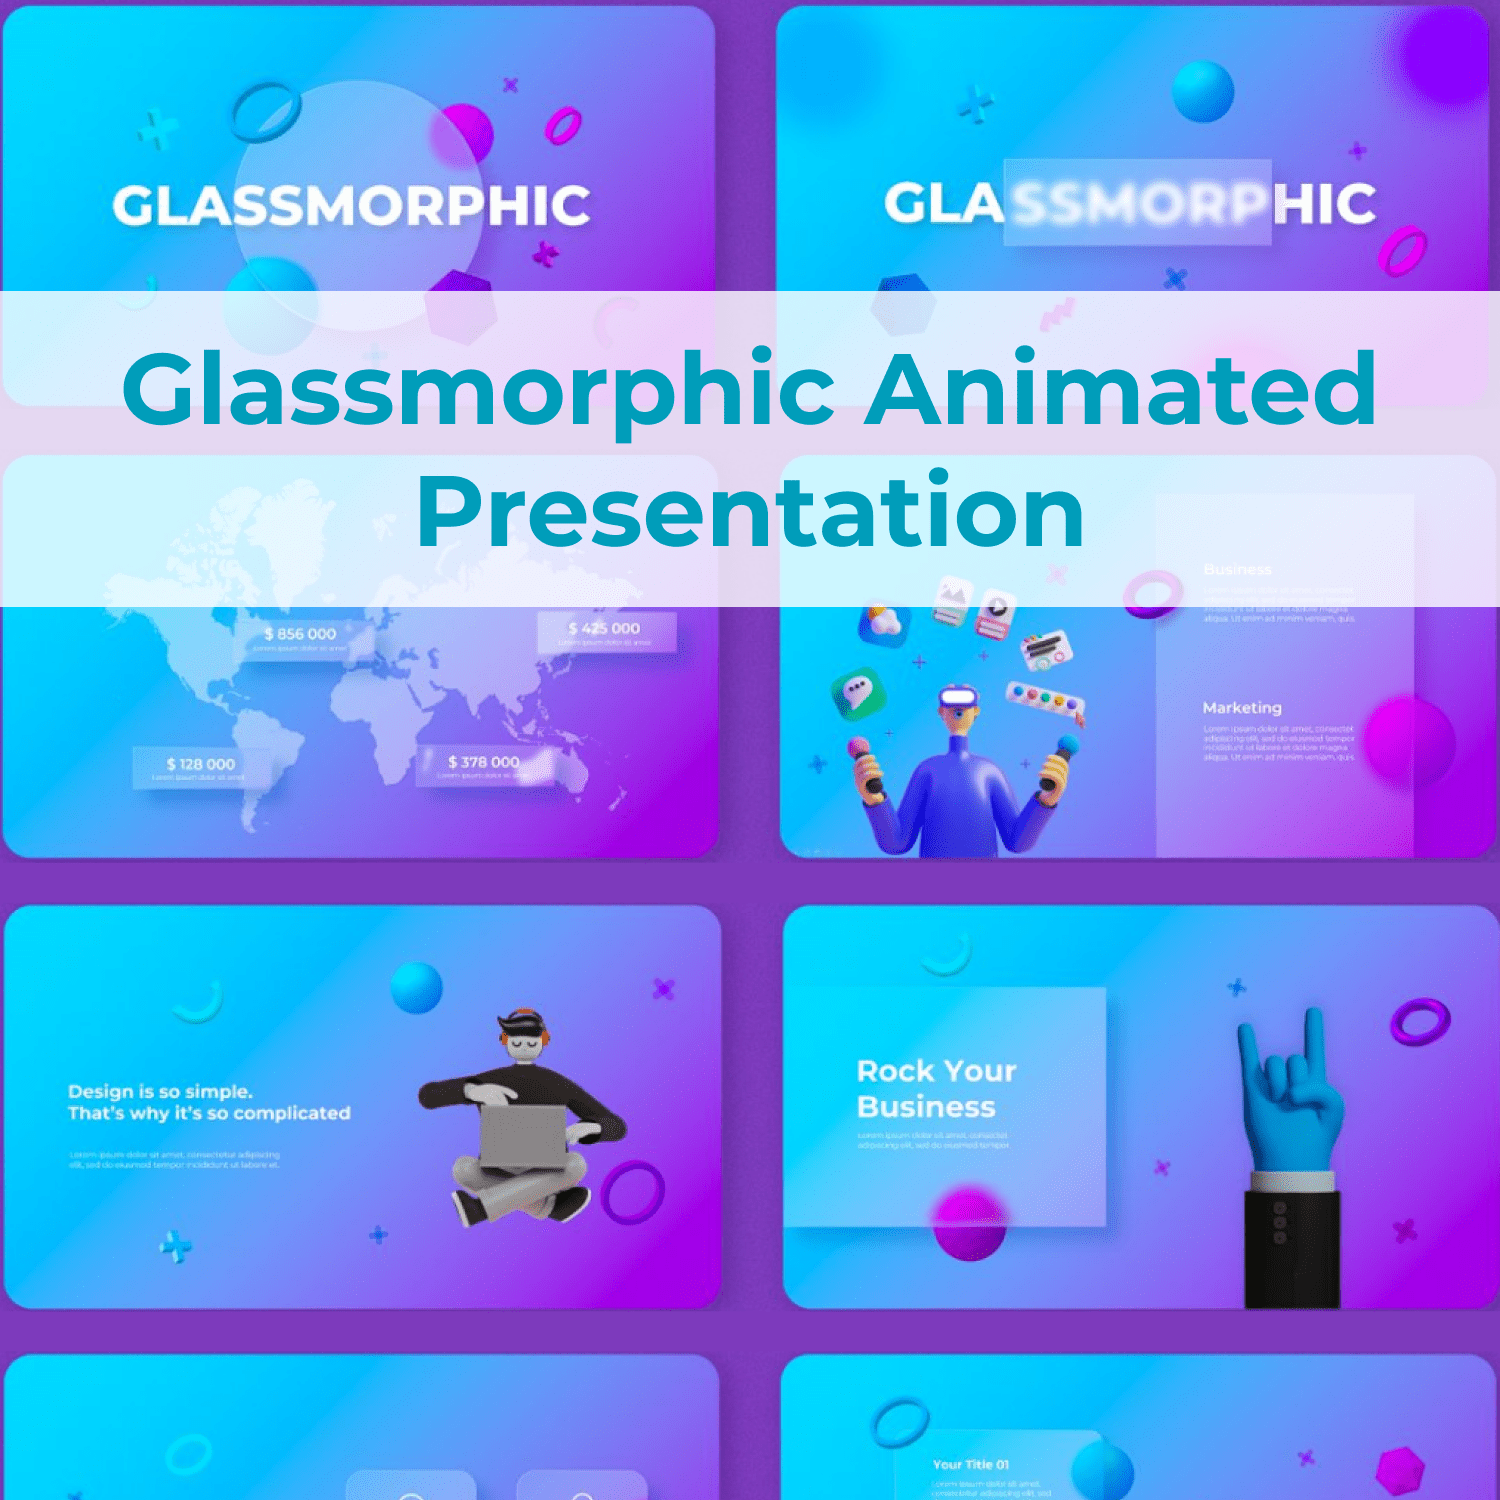 Glassmorphic Animated Presentation cover image.